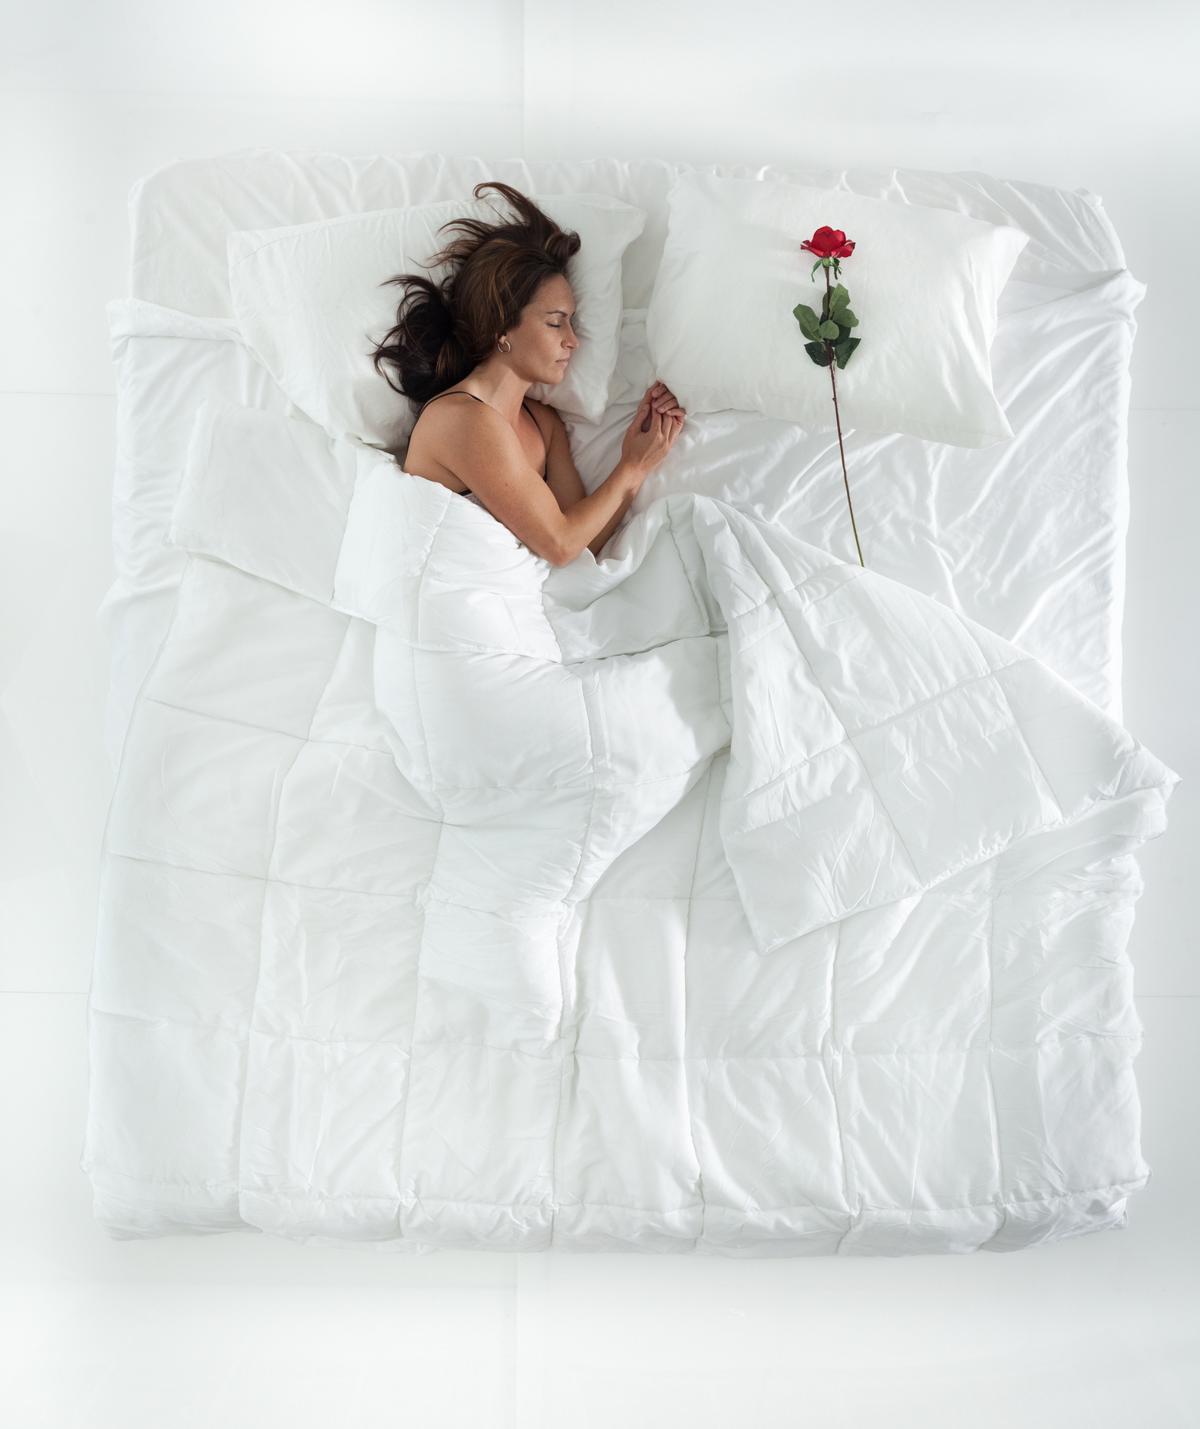 https://pixfeeds.com/images/sleep/mattresses/1200-524326375-woman-sleeping-on-bed.jpg